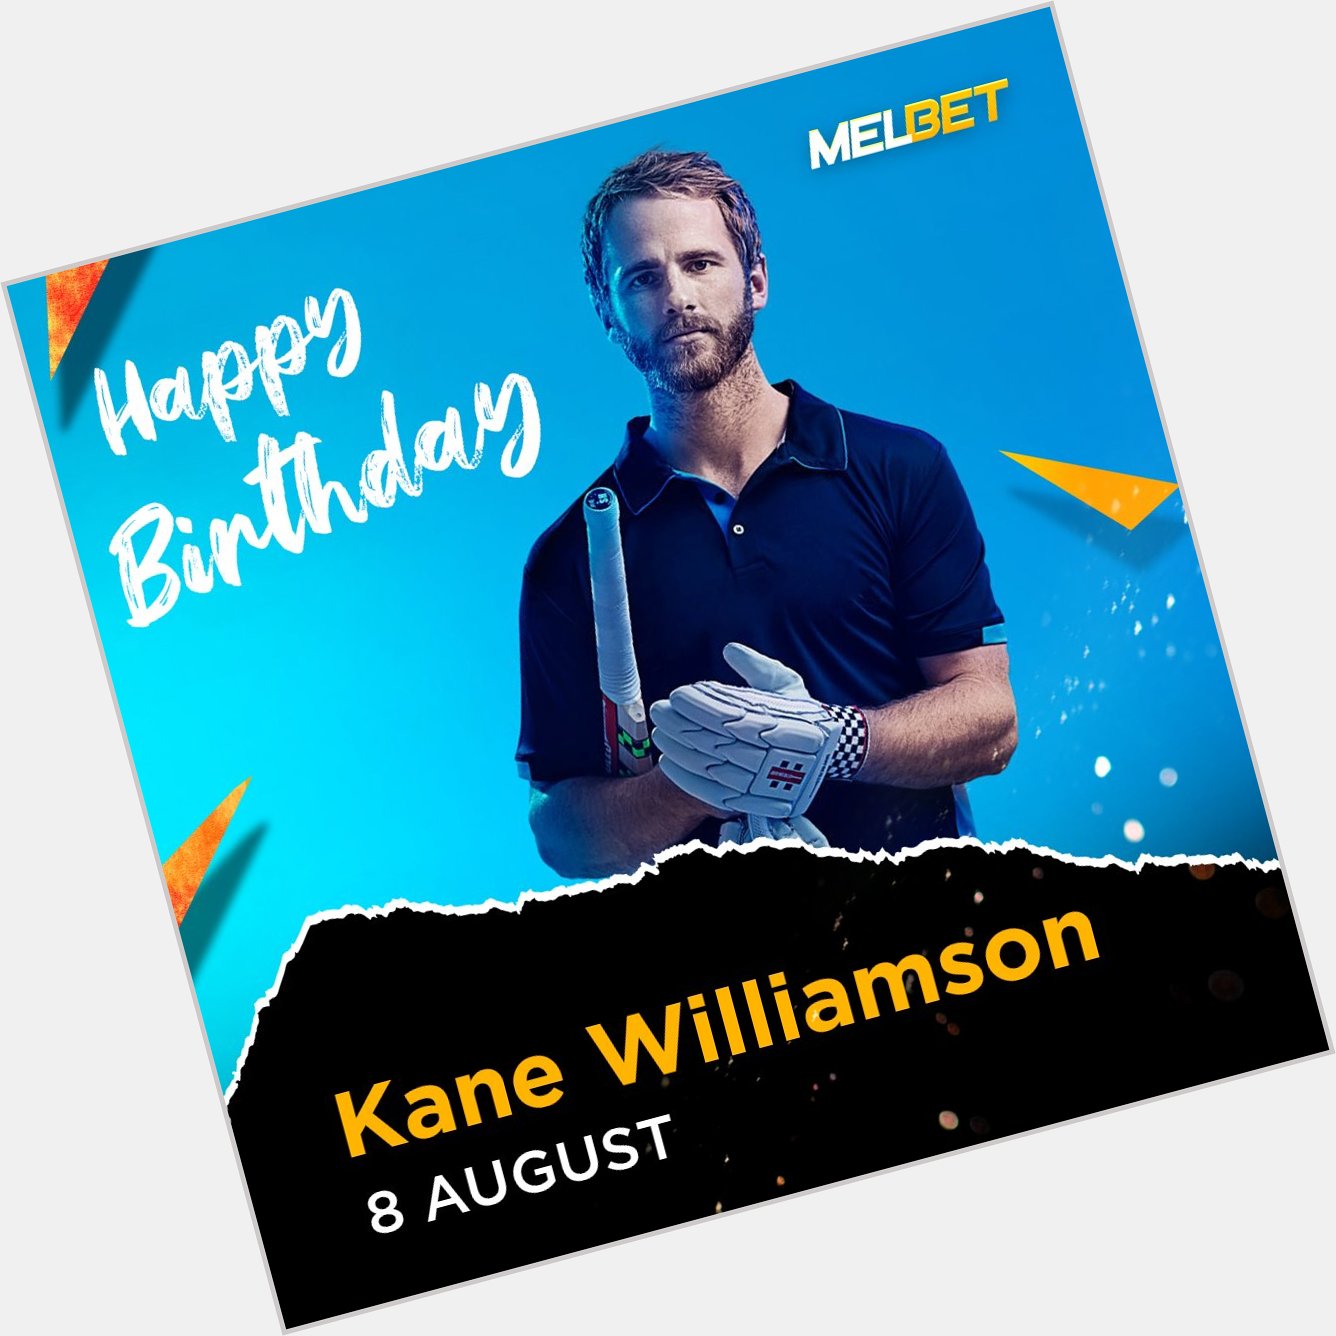  Wishing You a very Happy Birthday - Kane Williamson     